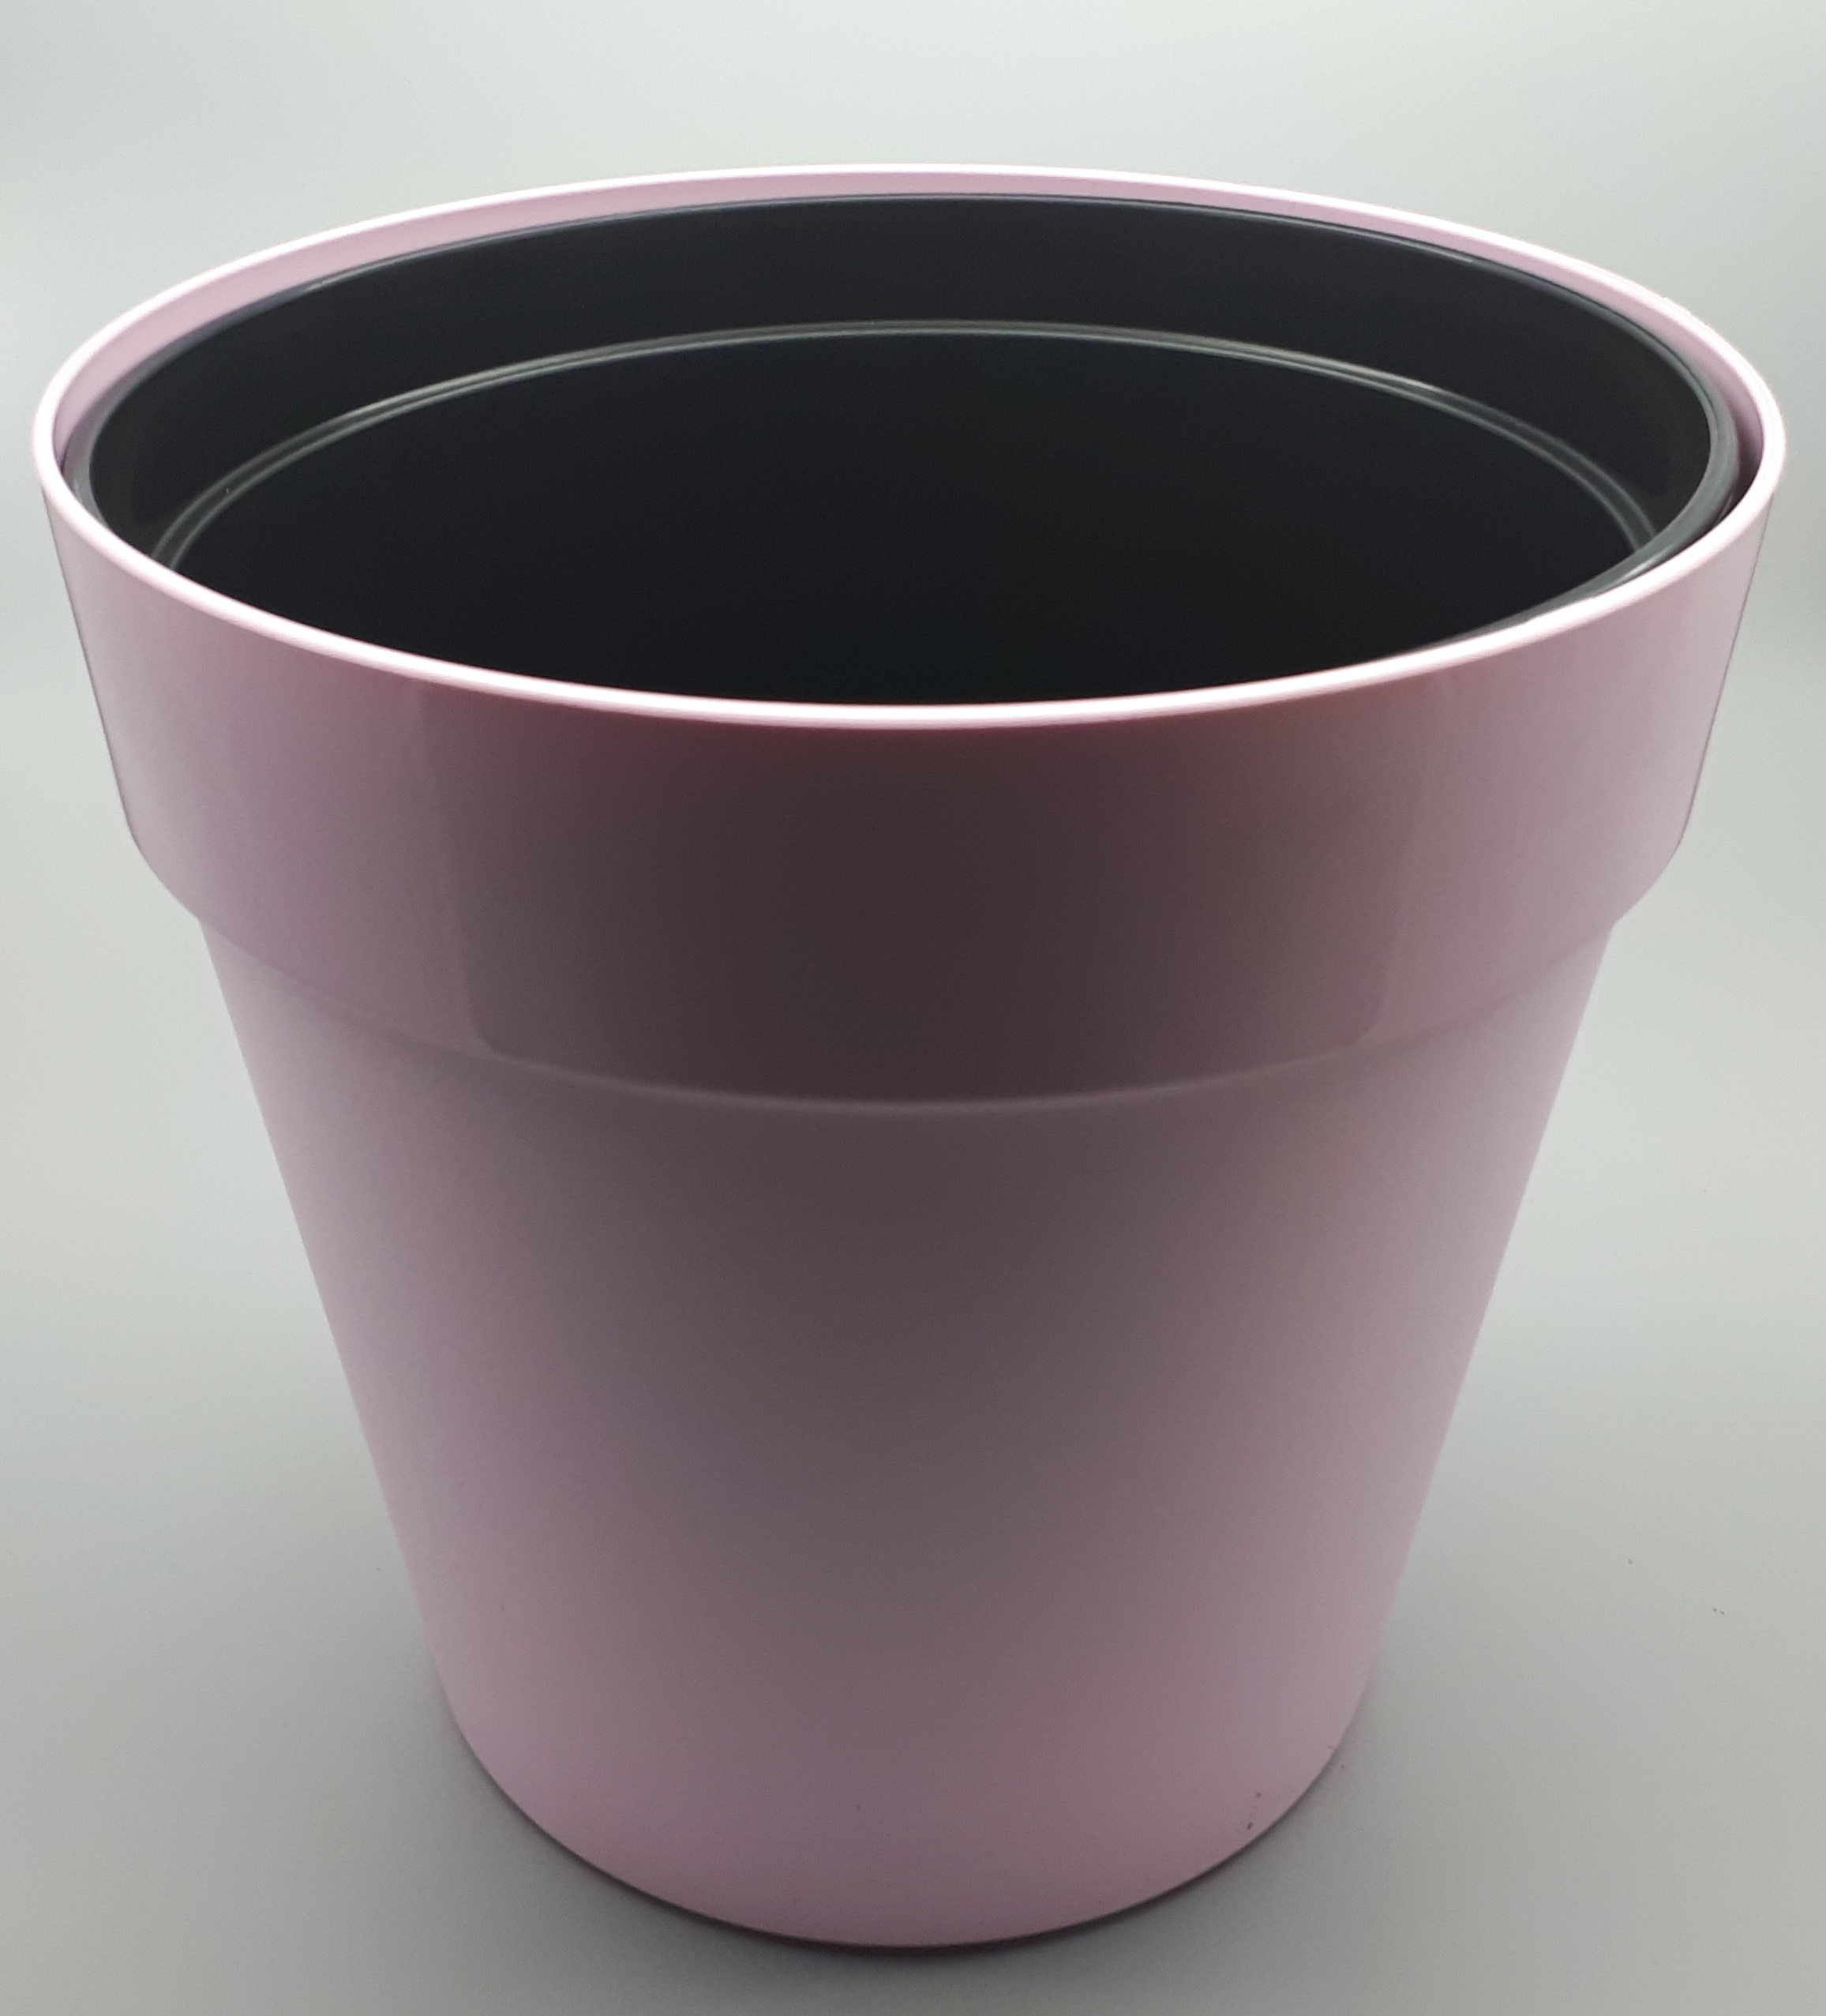 Decor pot light pink 21-inch